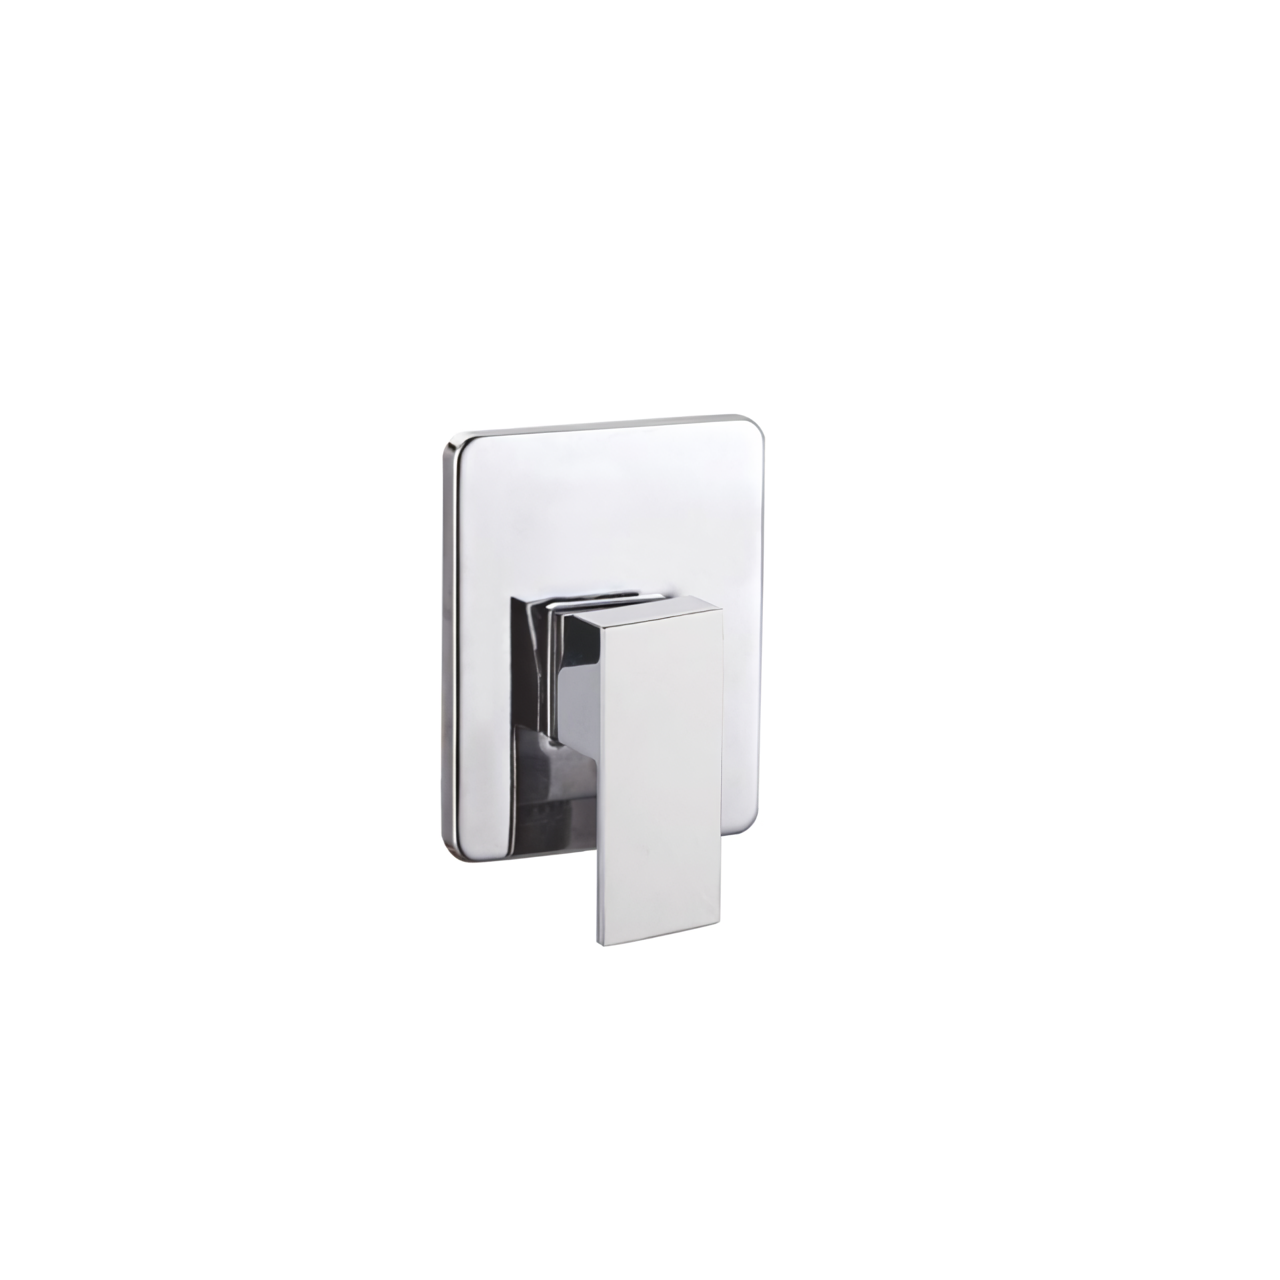 OJ-J2558H Wall Mount Bathroom Shower Valve Hot and Cold Mixer Single Function Shower Handle Valve Trim Kit Brass Shower Faucet